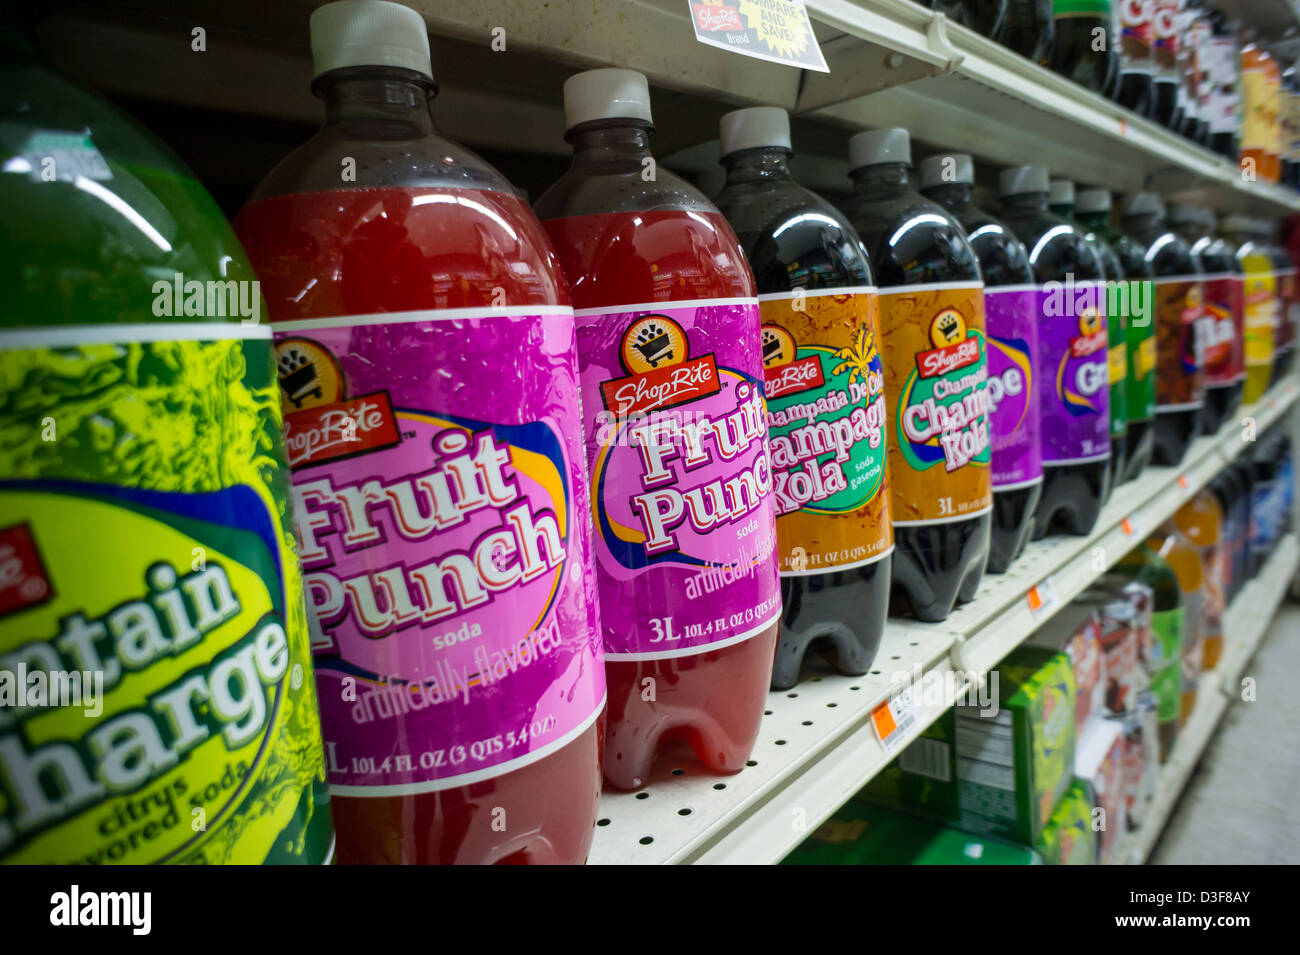 Three liter bottles of house brand soda are seen on a supermarket shelf in New York Stock Photo